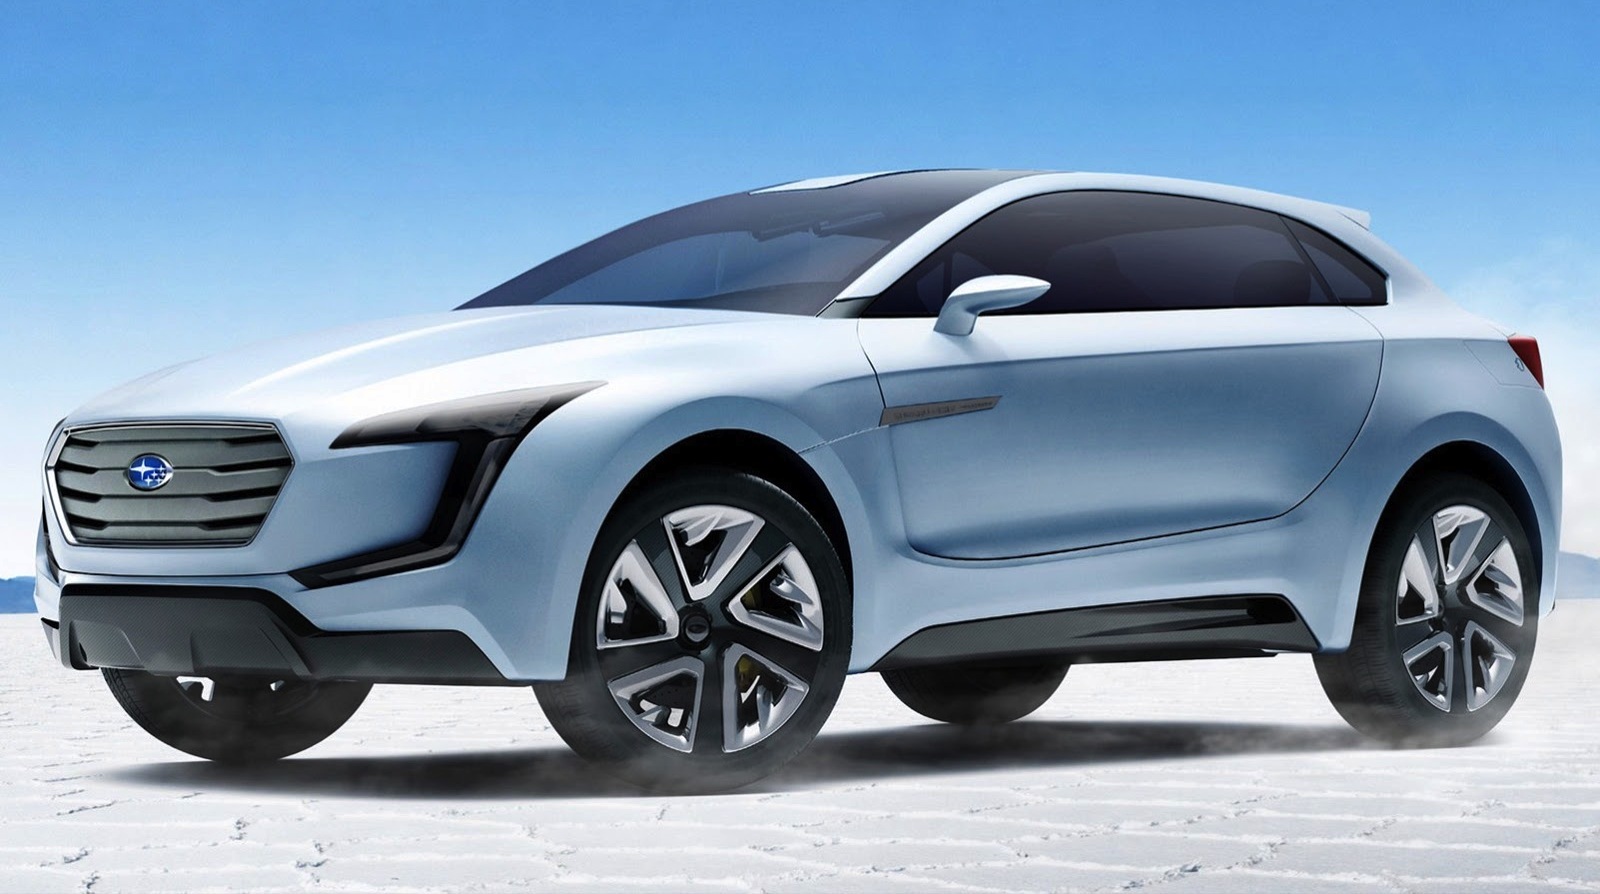 Subaru Viziv concept previews new SUV design language 